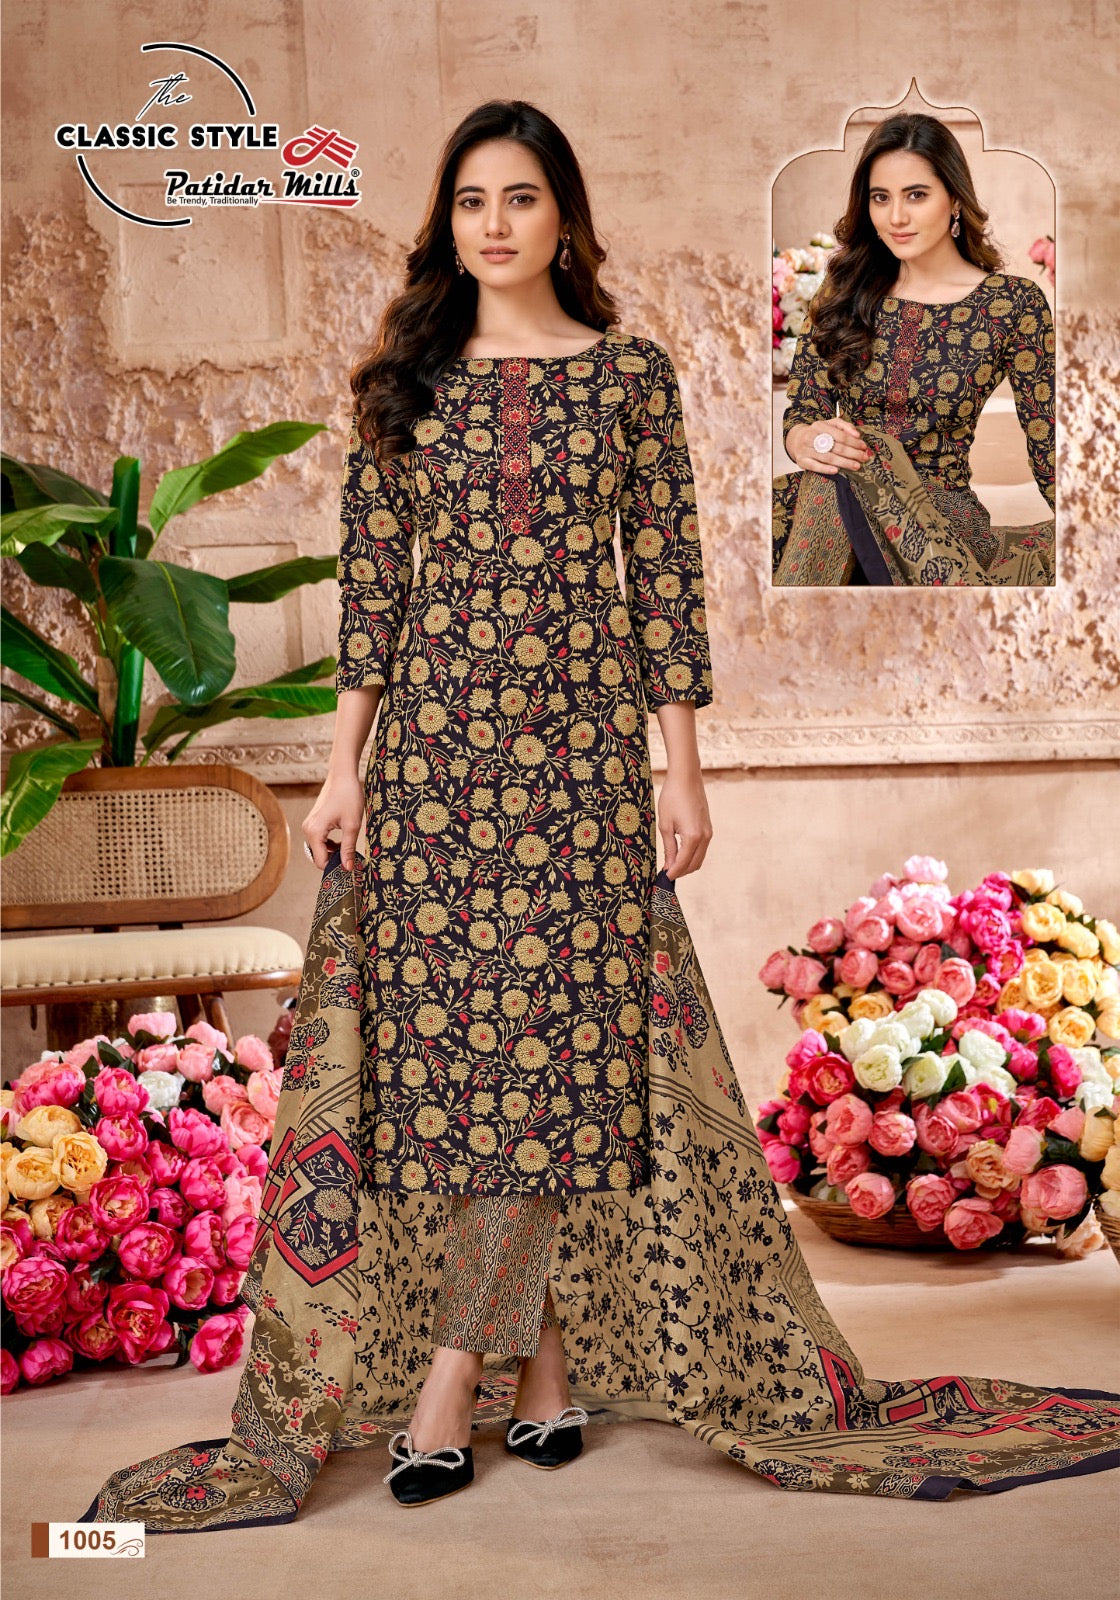 Patidar Mills The Classic Style Pure Cotton Printed Dress Material Jetpur